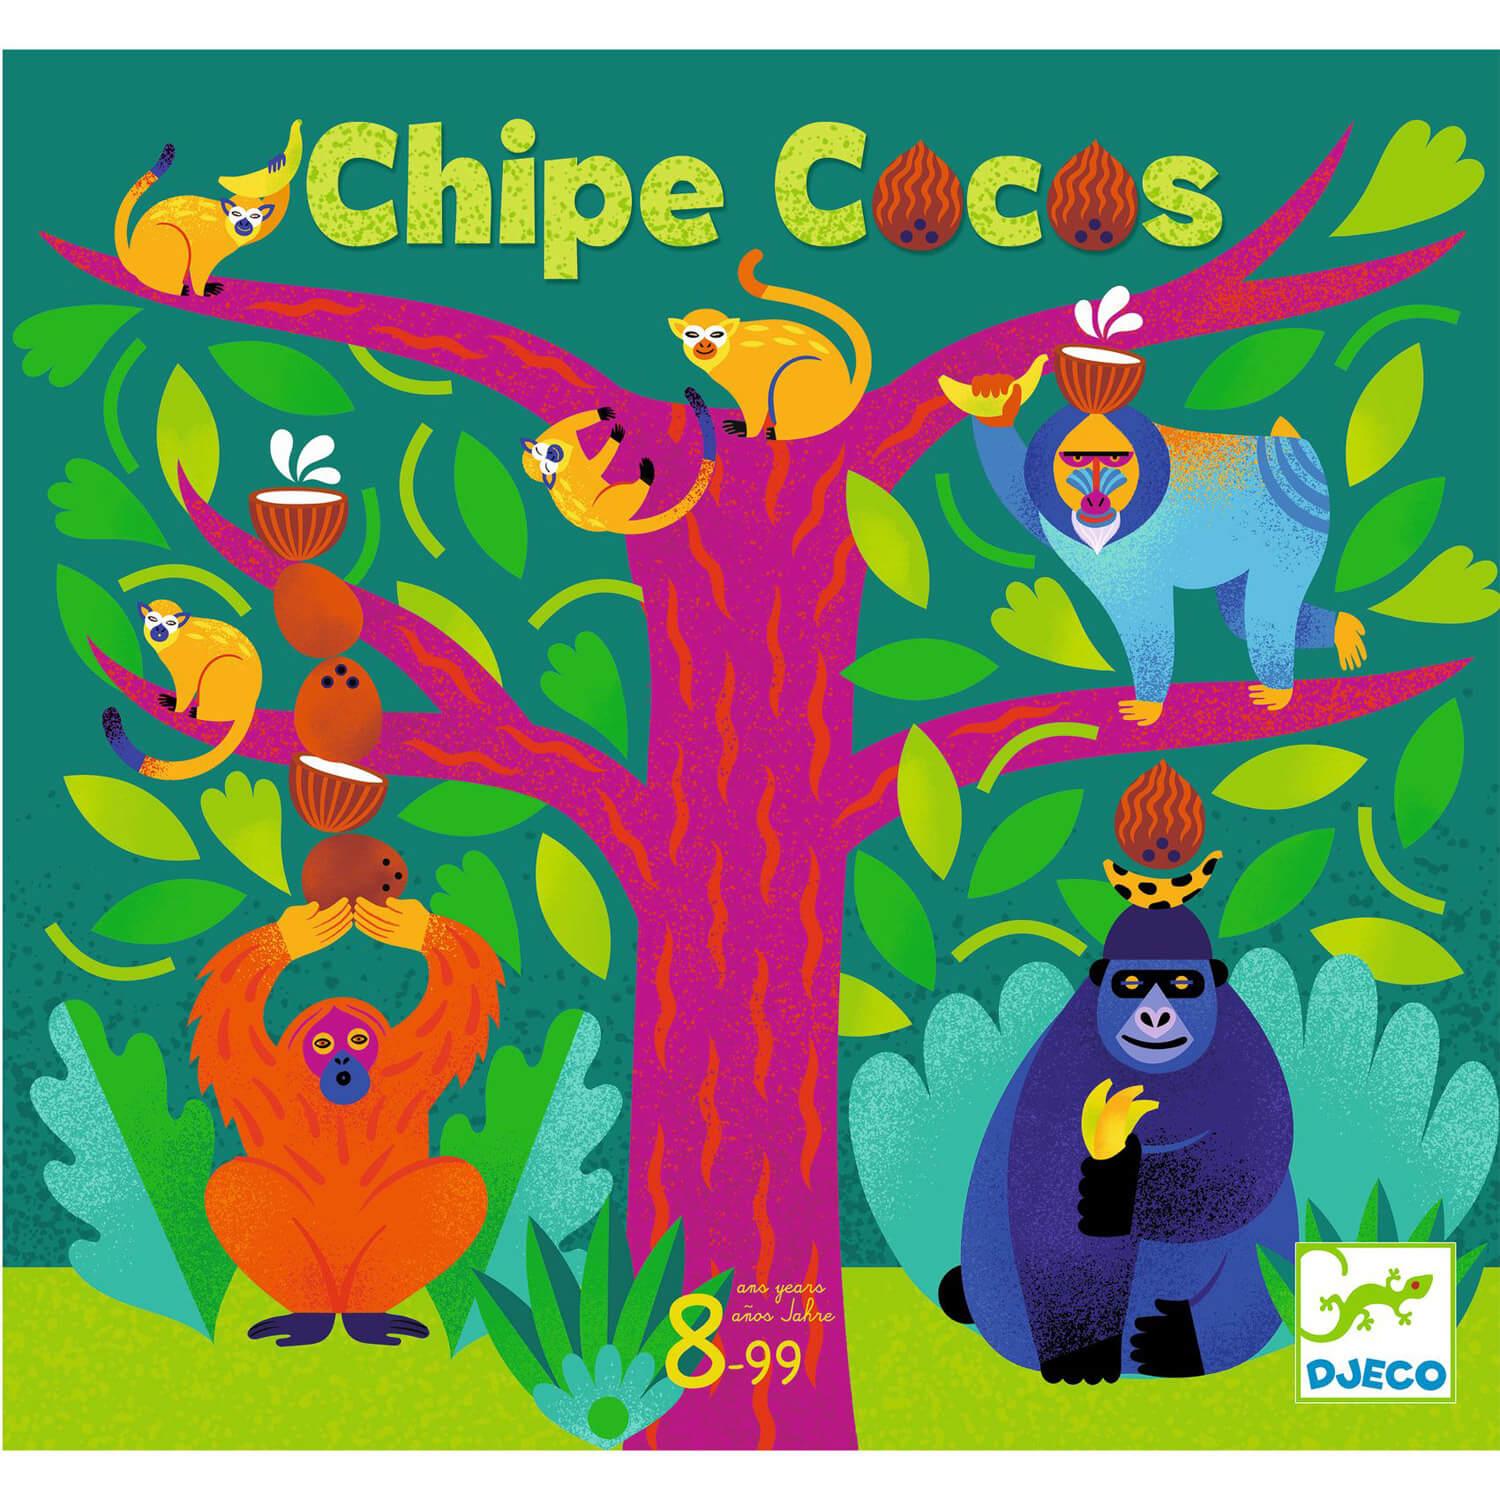 Chipe Cocos